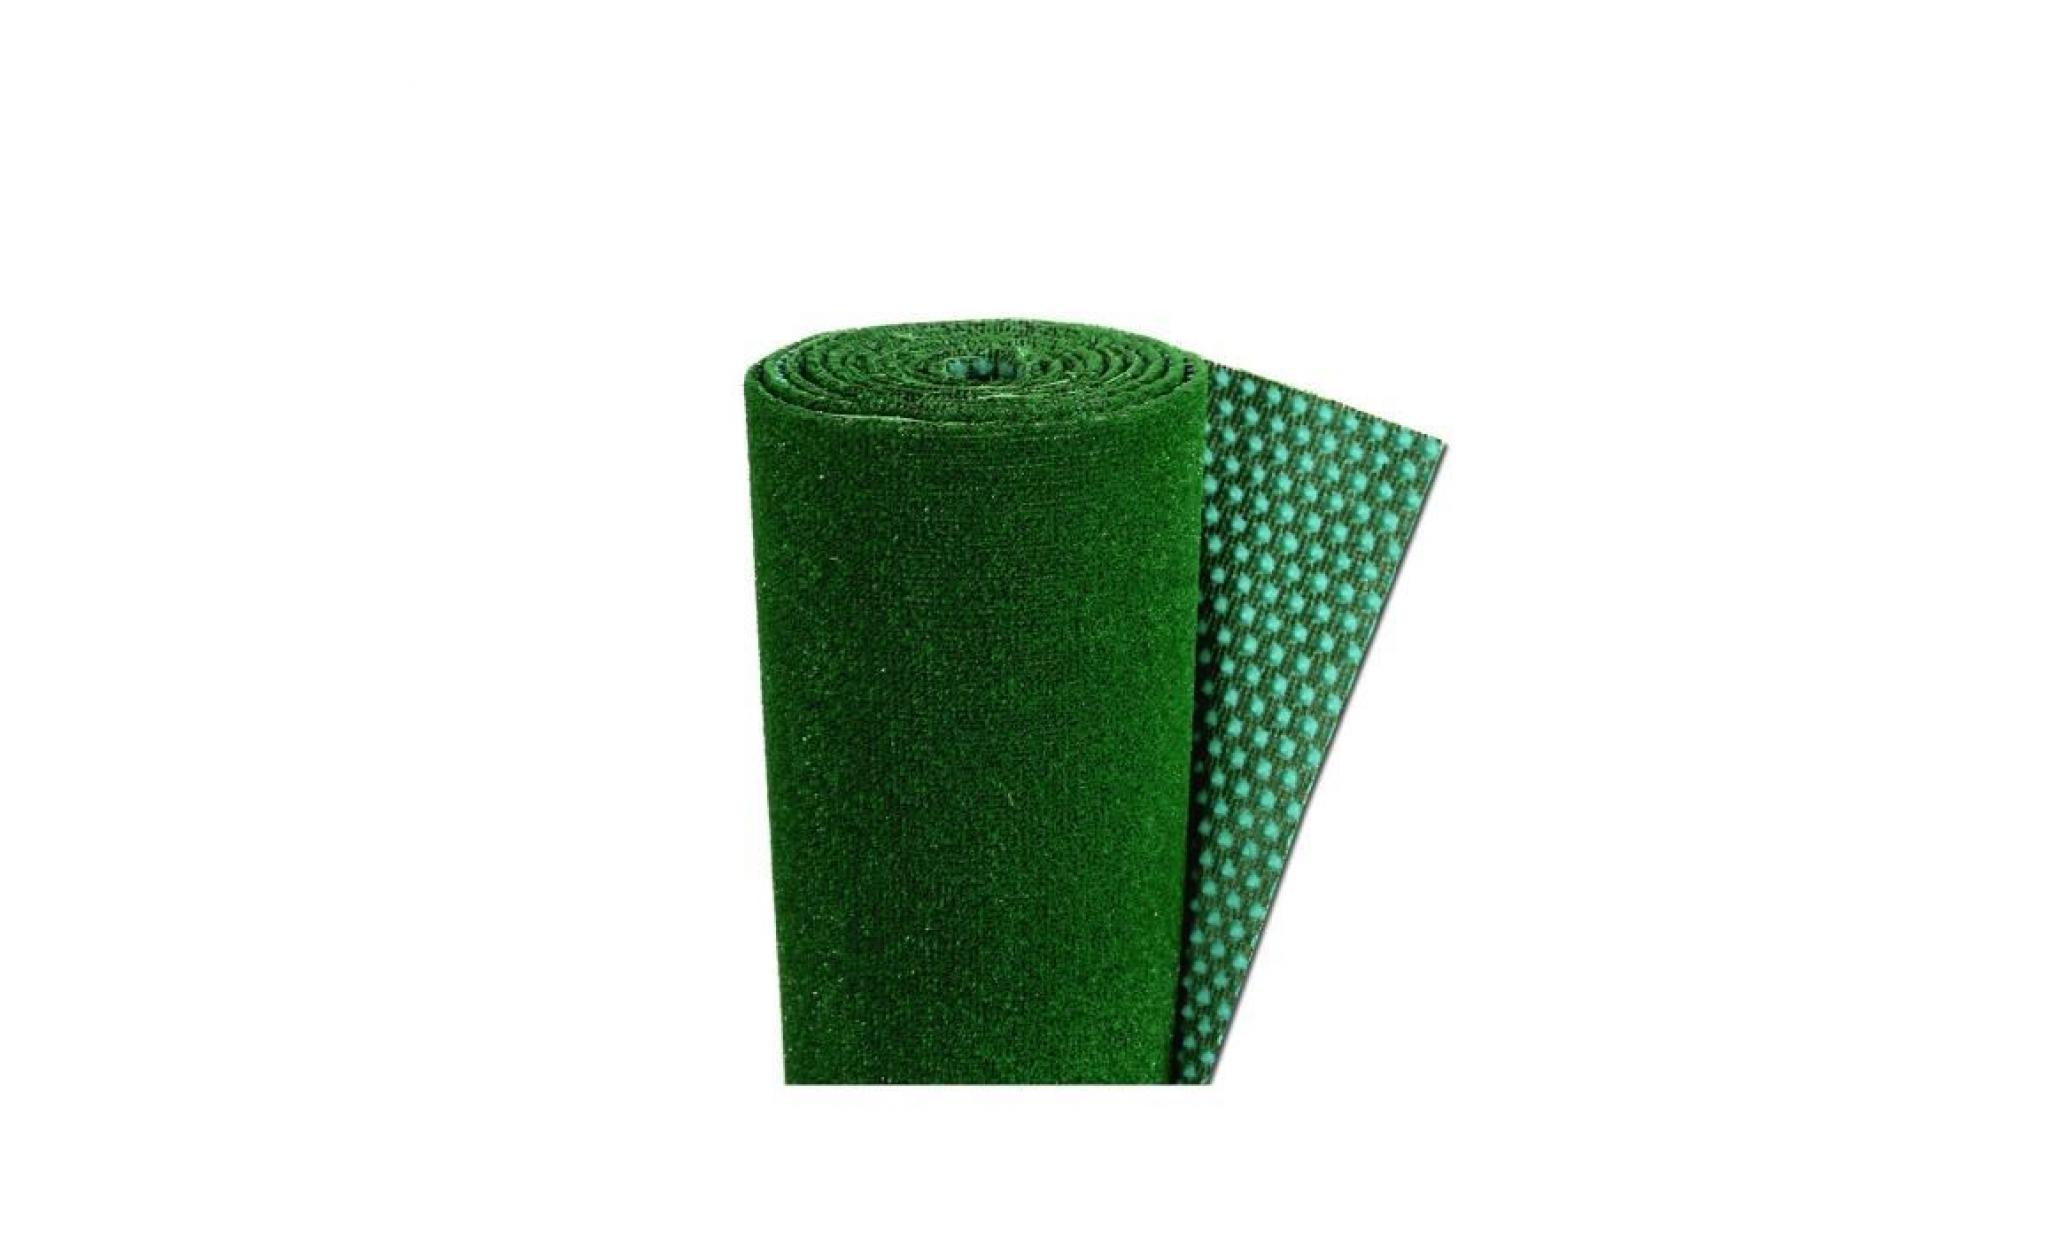 york   tapis type gazon artificiel avec nubs – pour jardin, terrasse, balcon   vert   [200x50 cm] pas cher